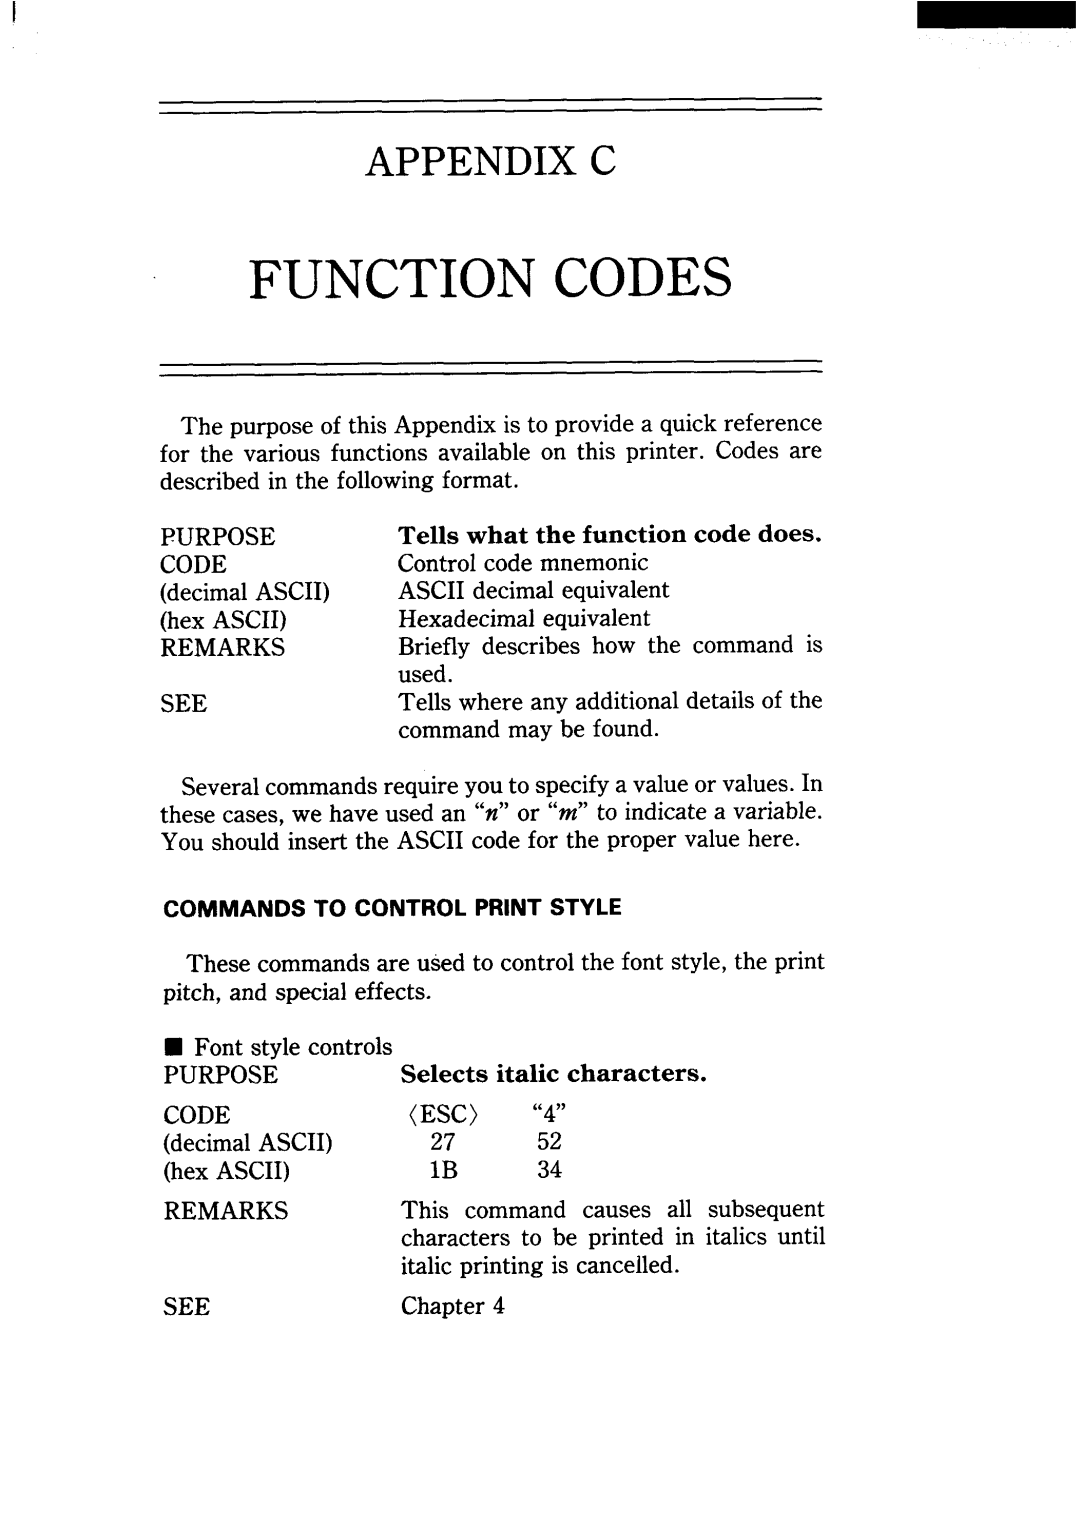 Star Micronics NX-15 user manual Functioncodes, Appendix C 